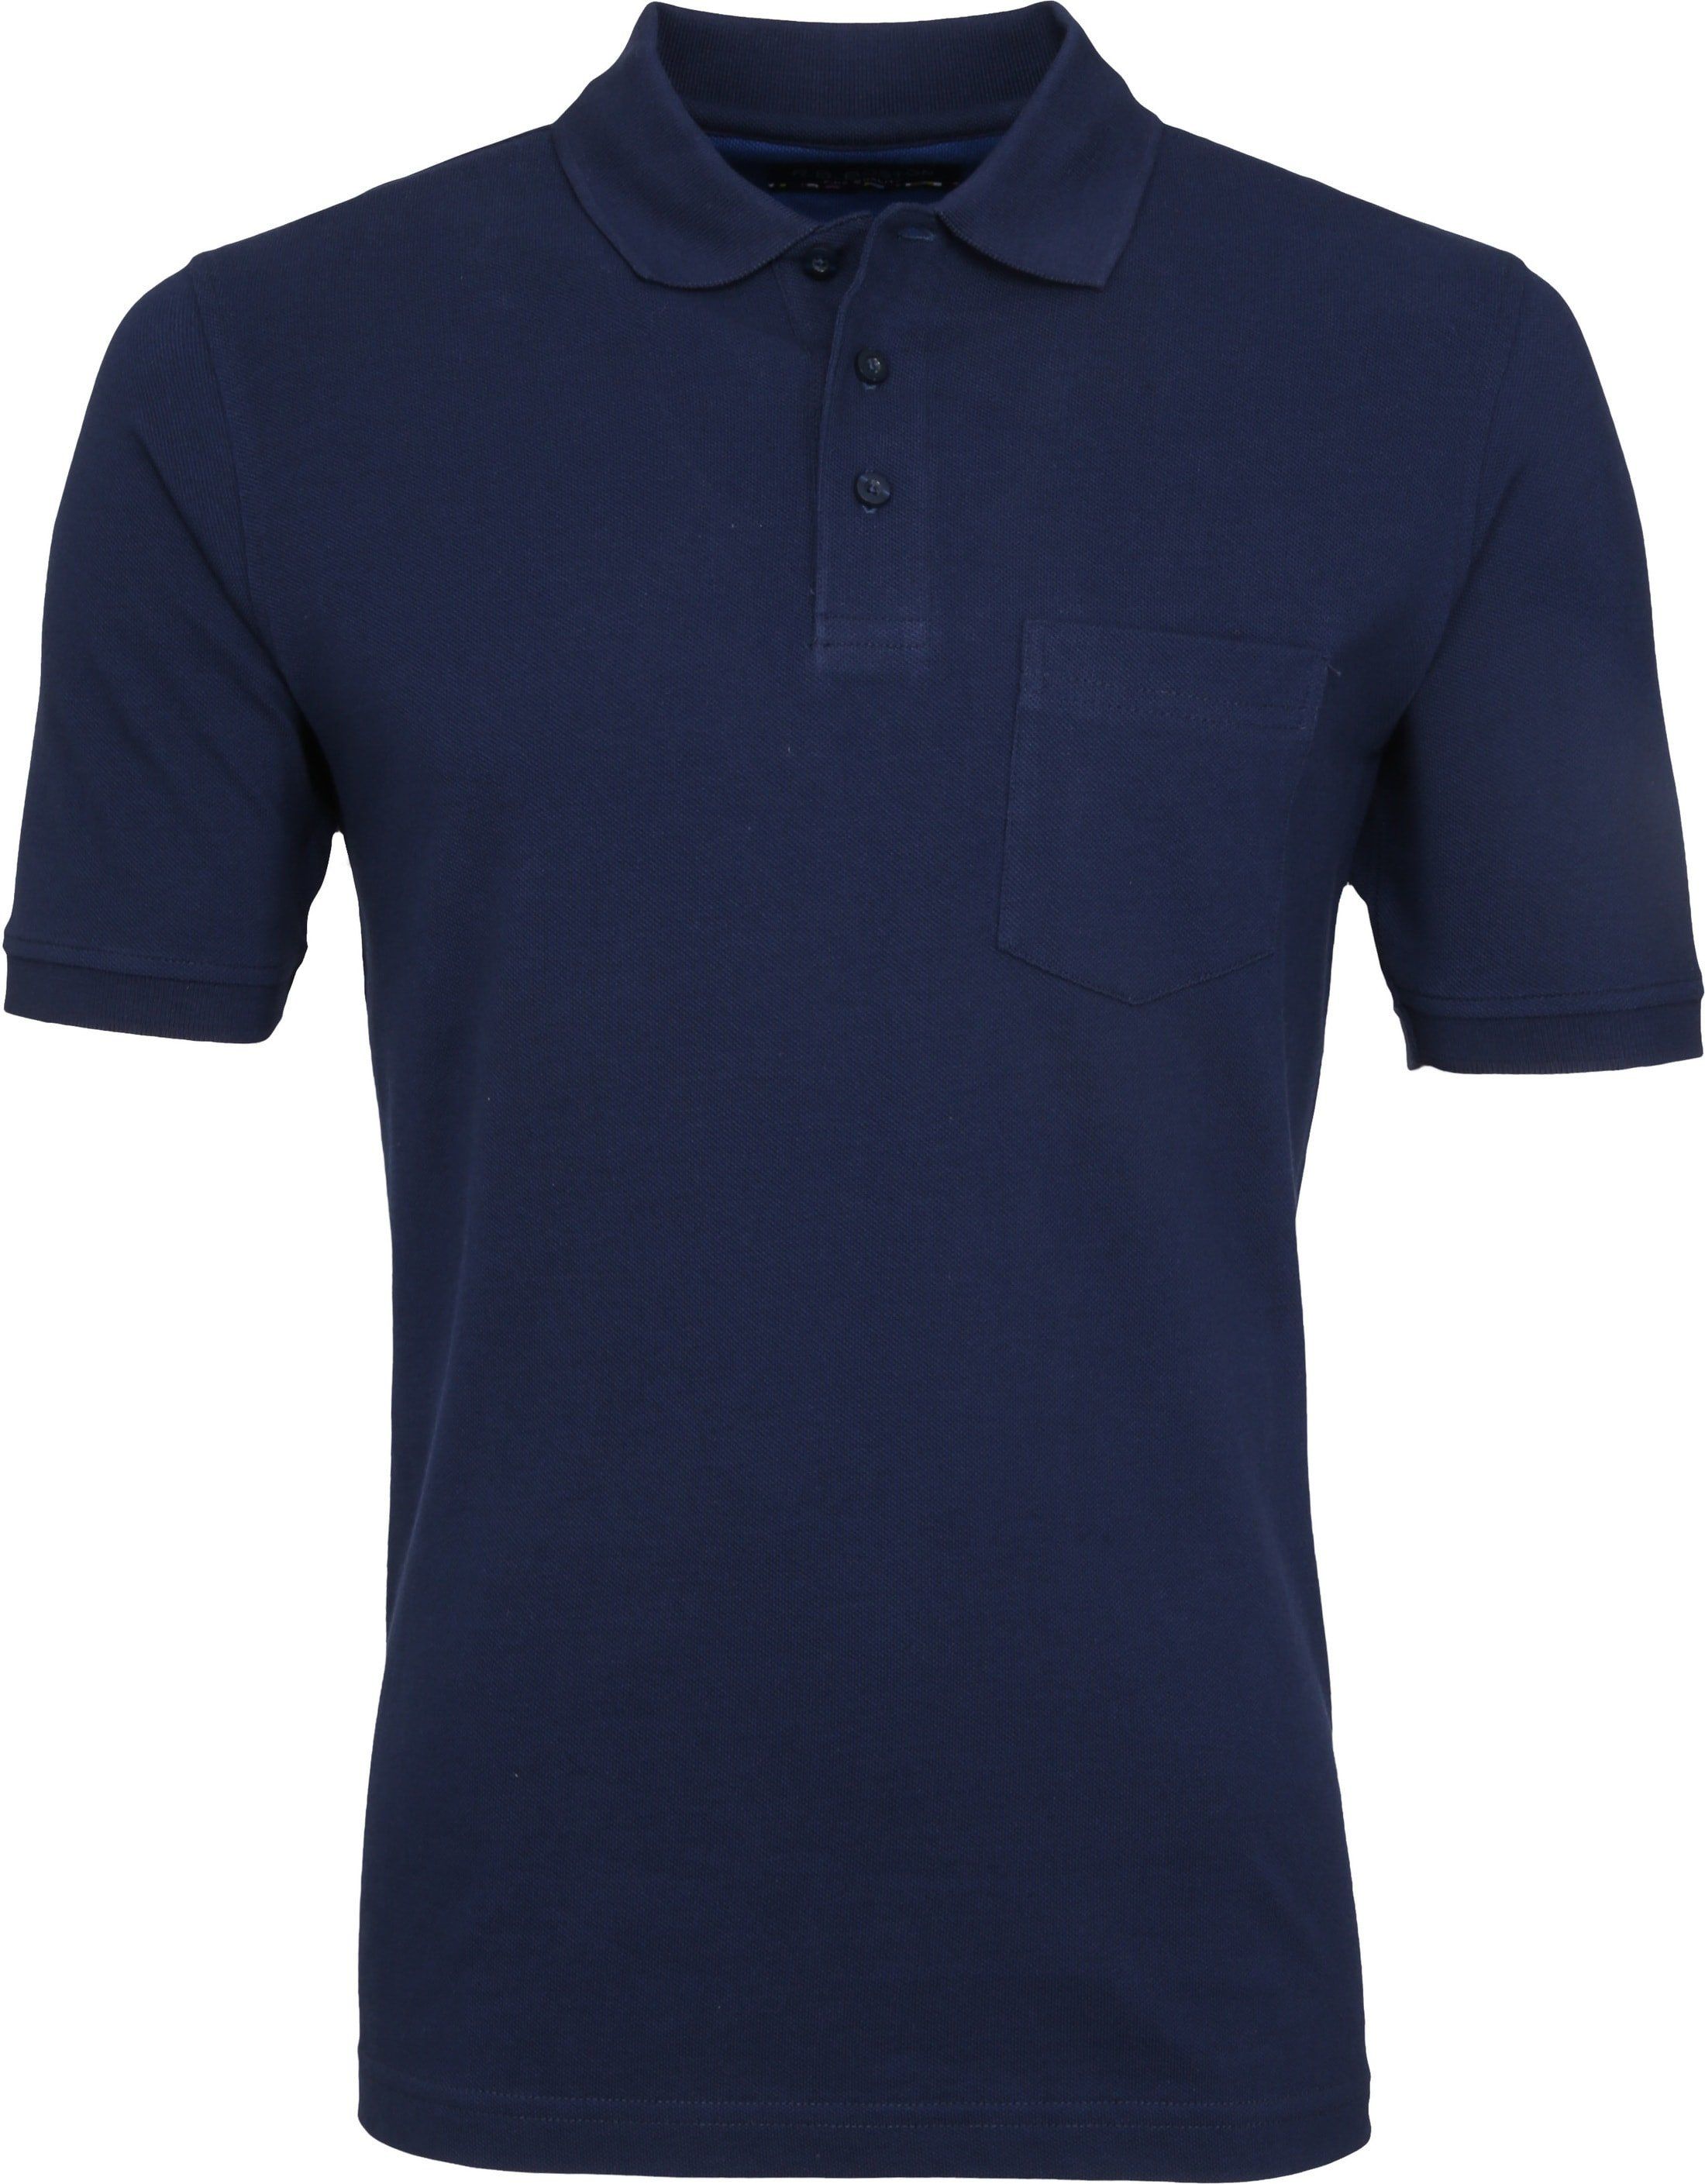 Suitable Polo Shirt Boston Navy Dark Blue Blue size S